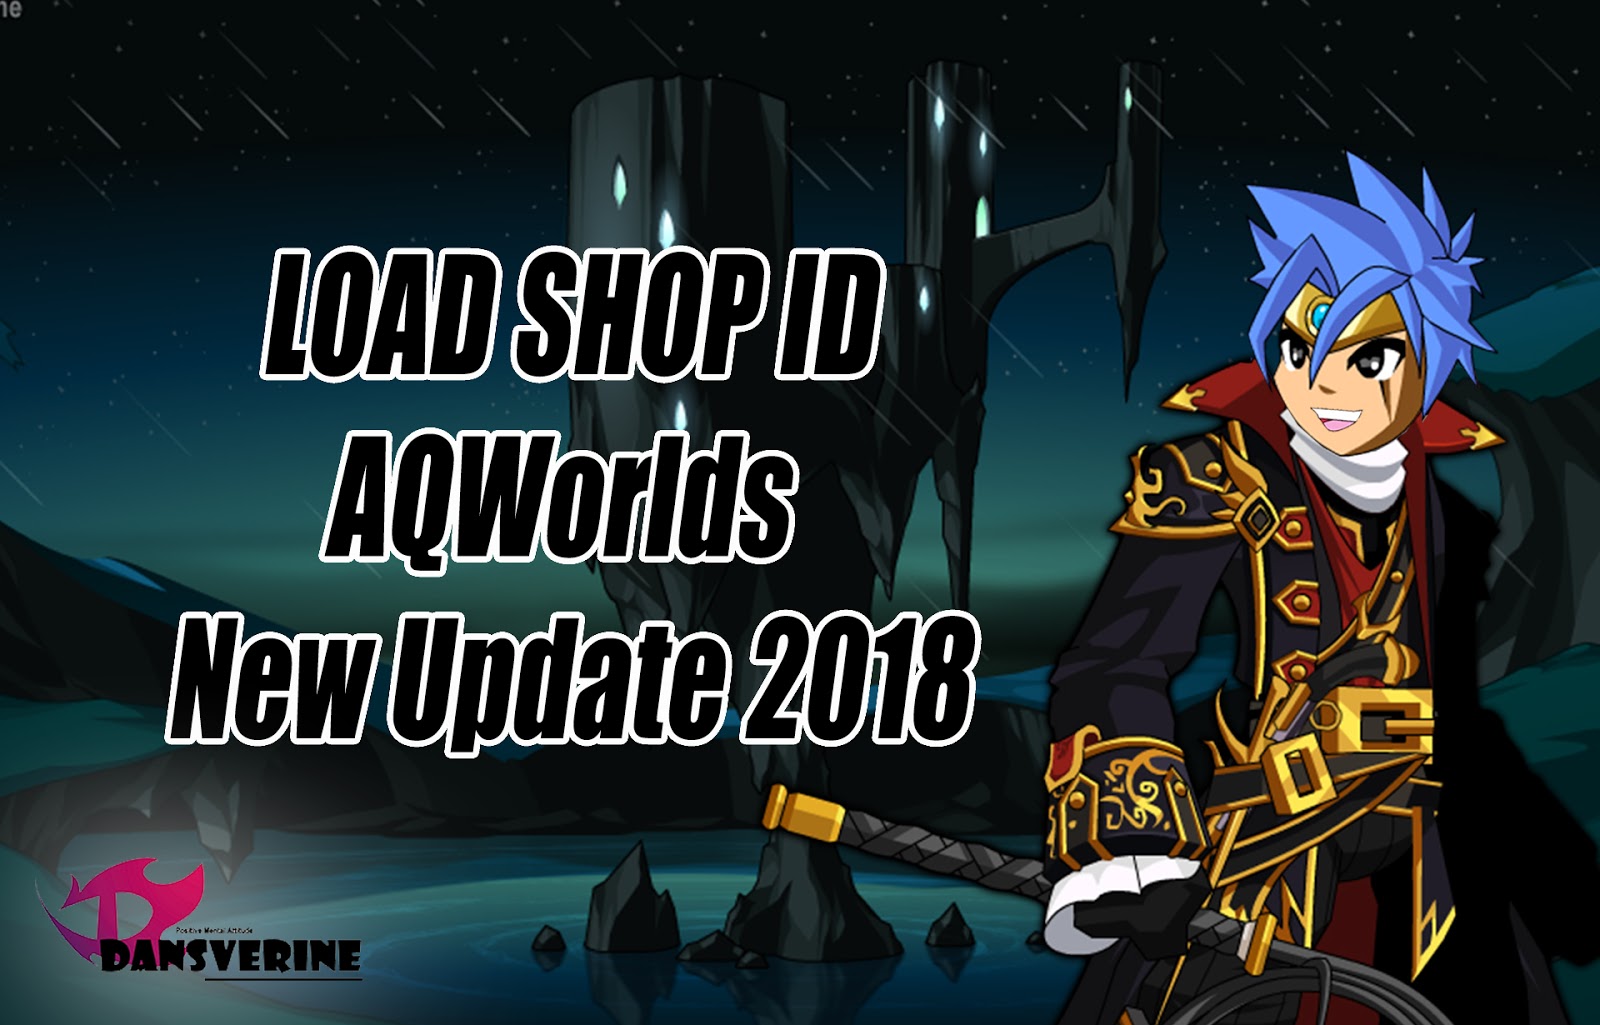 √ Load Quest ID AQWorlds Full Update 2021 [1-8000] - Dansverine